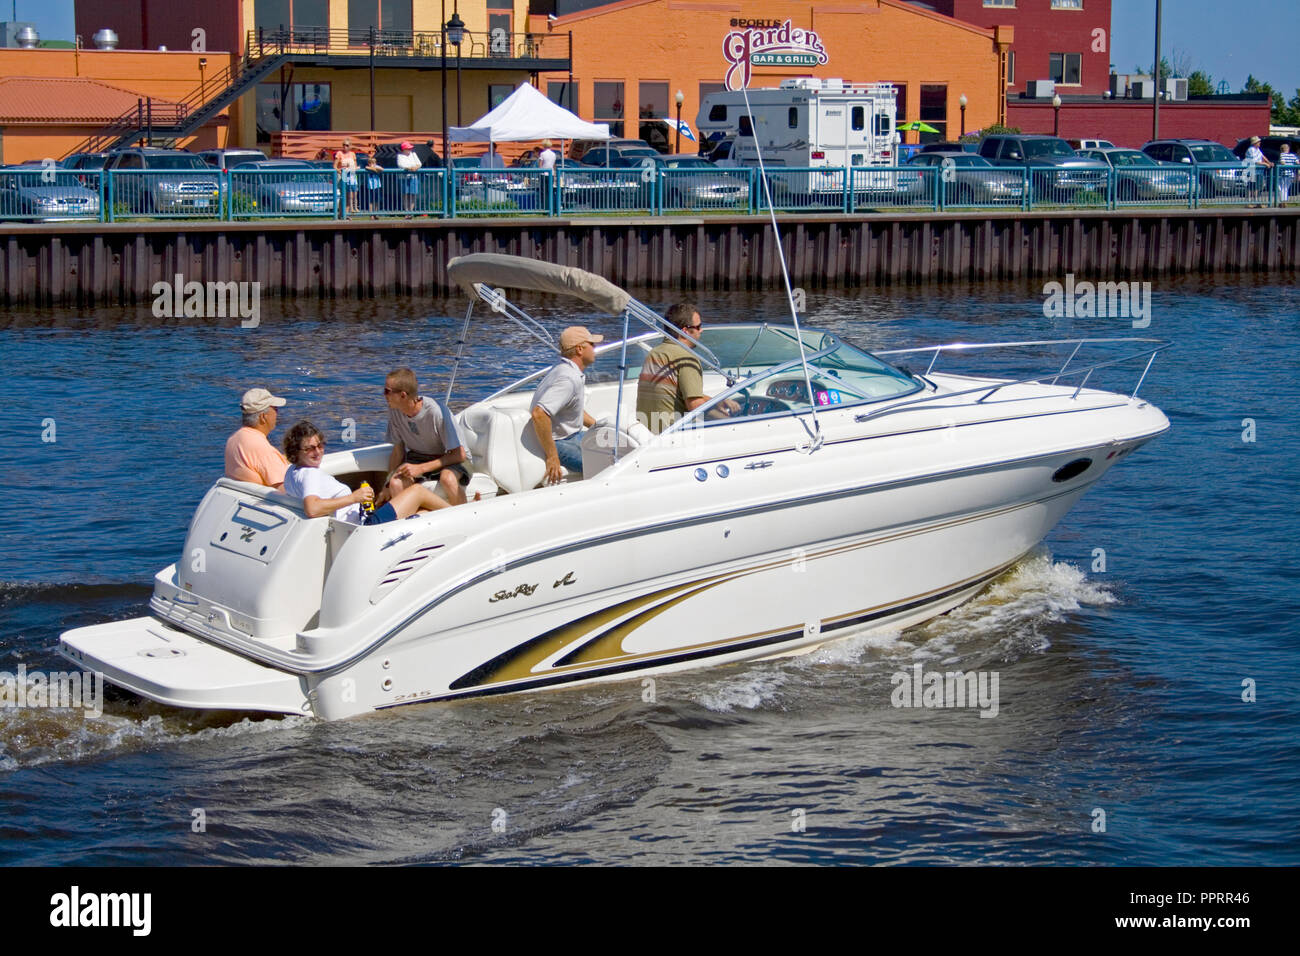 Family riding in a luxury inboard Sea Ray speedboat watercraft in